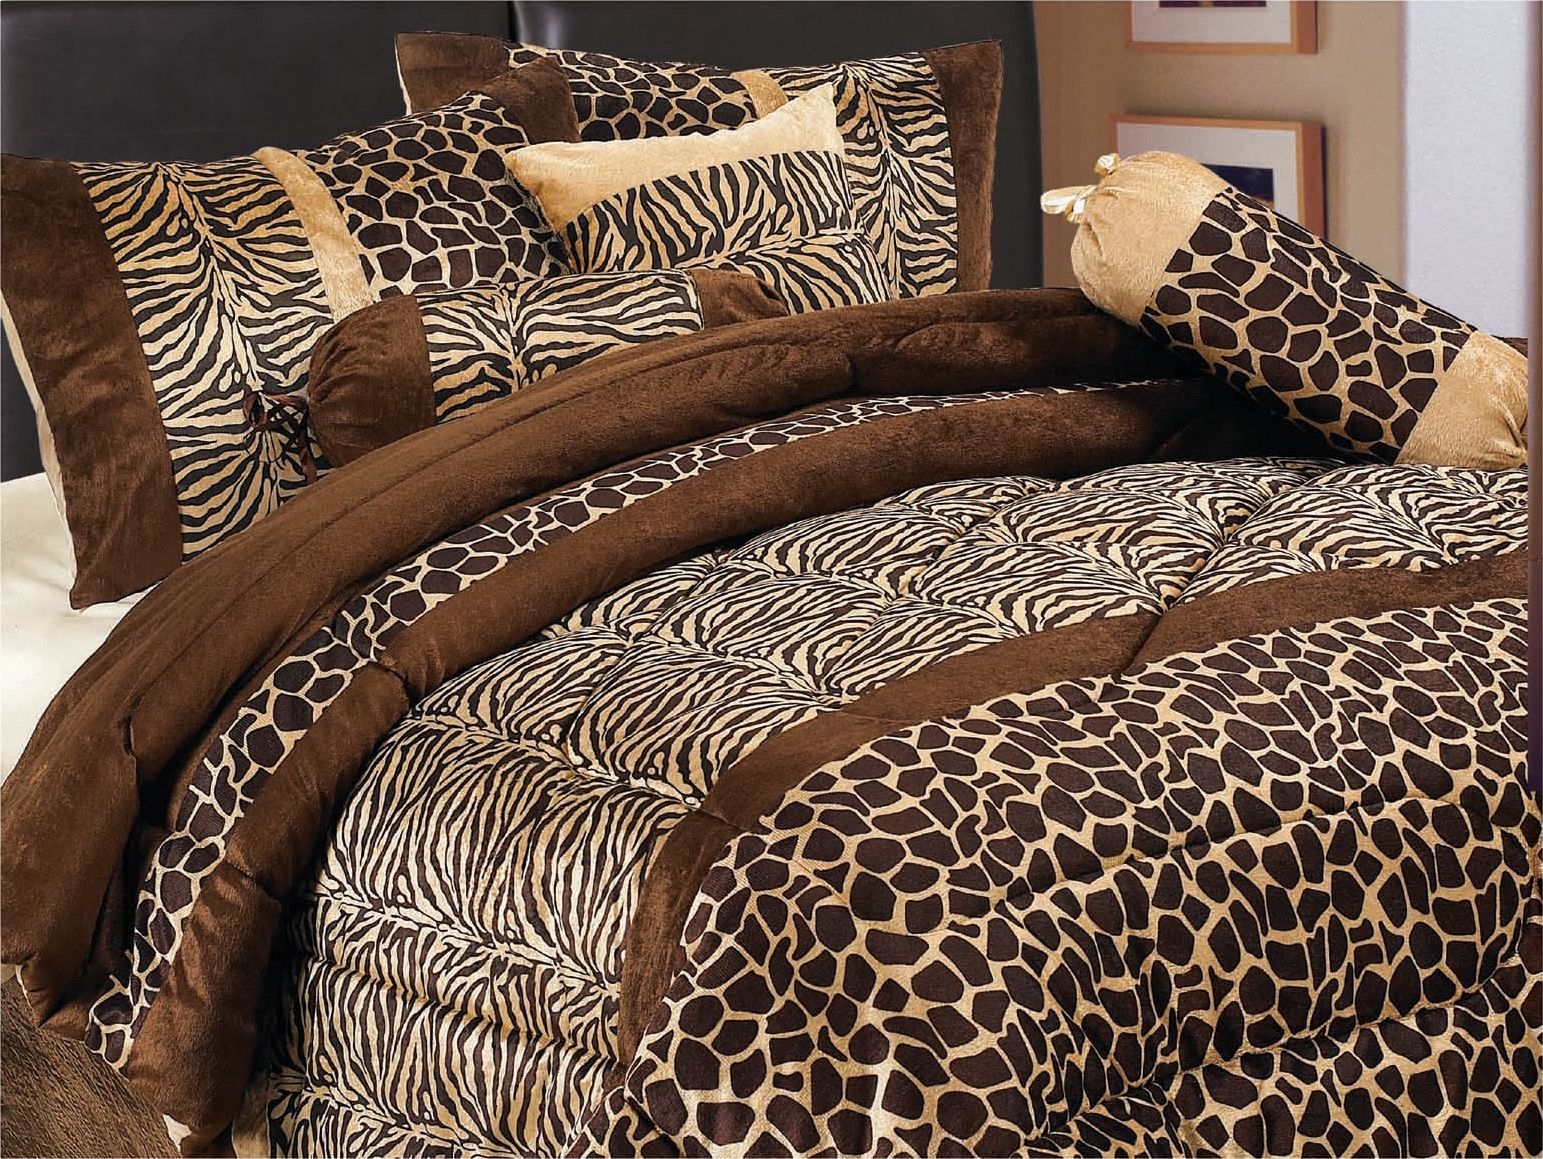 Luxury Animal Print Bedding - Ideas on Foter